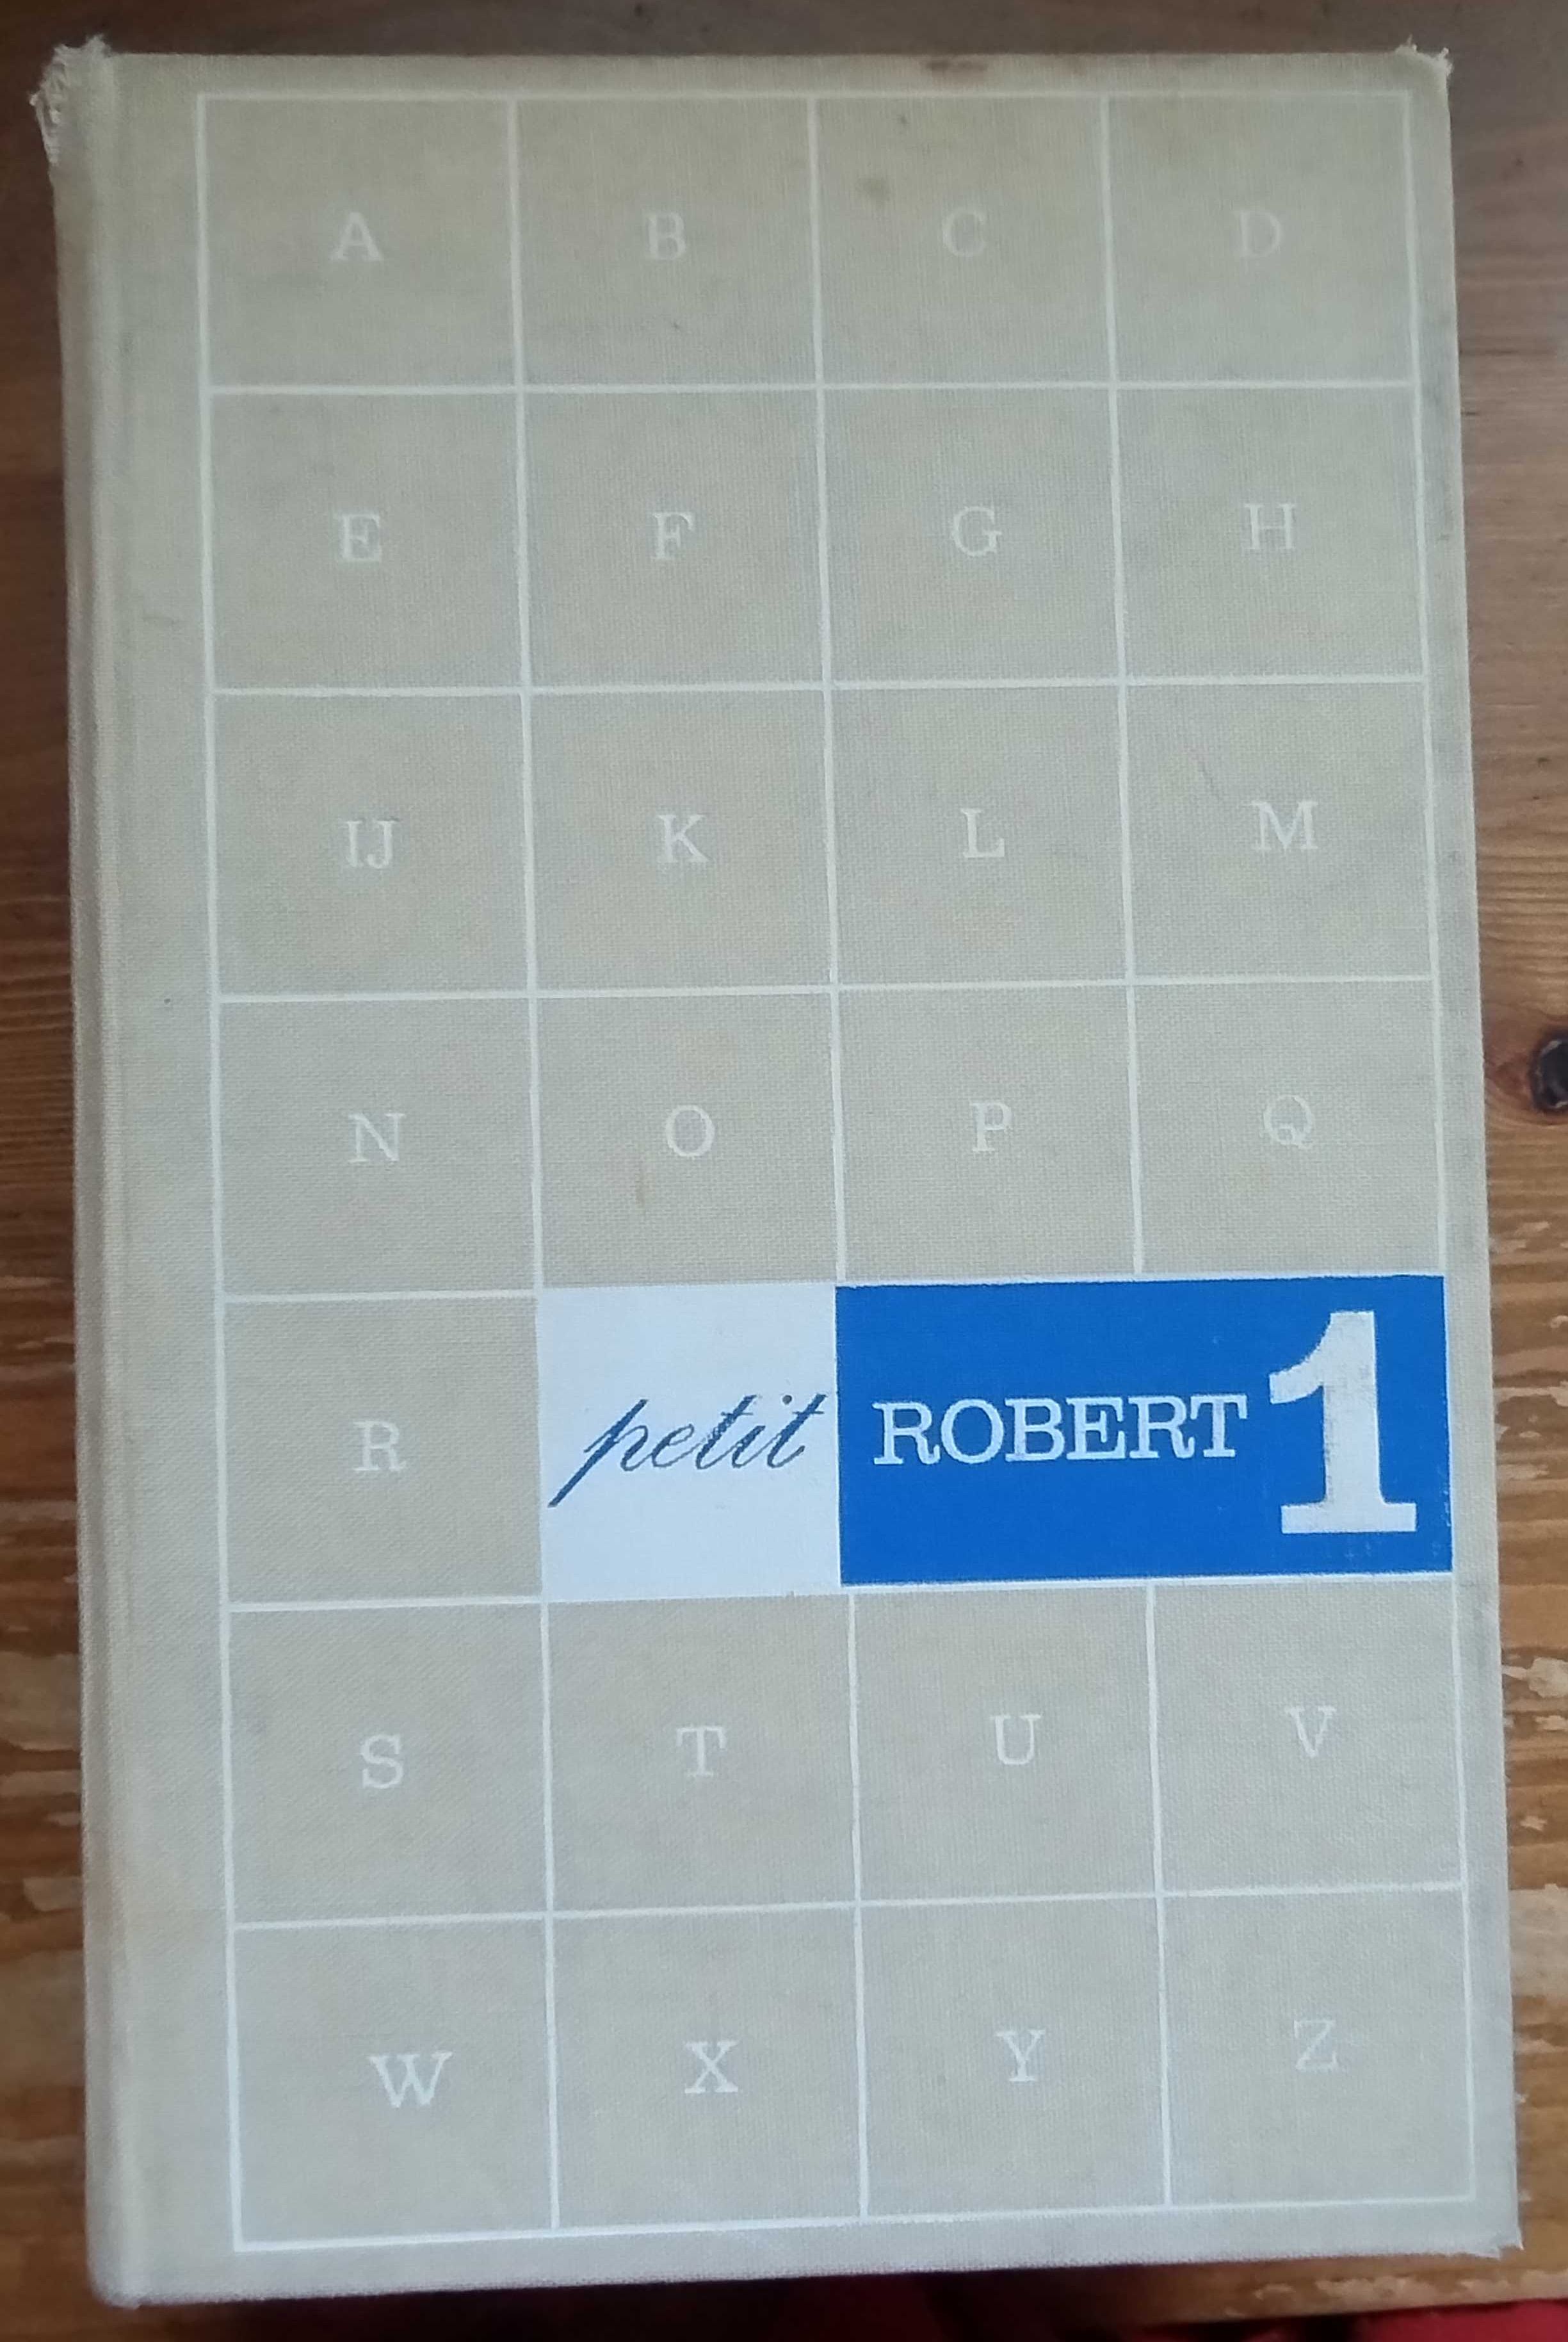 Le petit Robert 1 dictionnaire, Paris 1967, słownik francuski